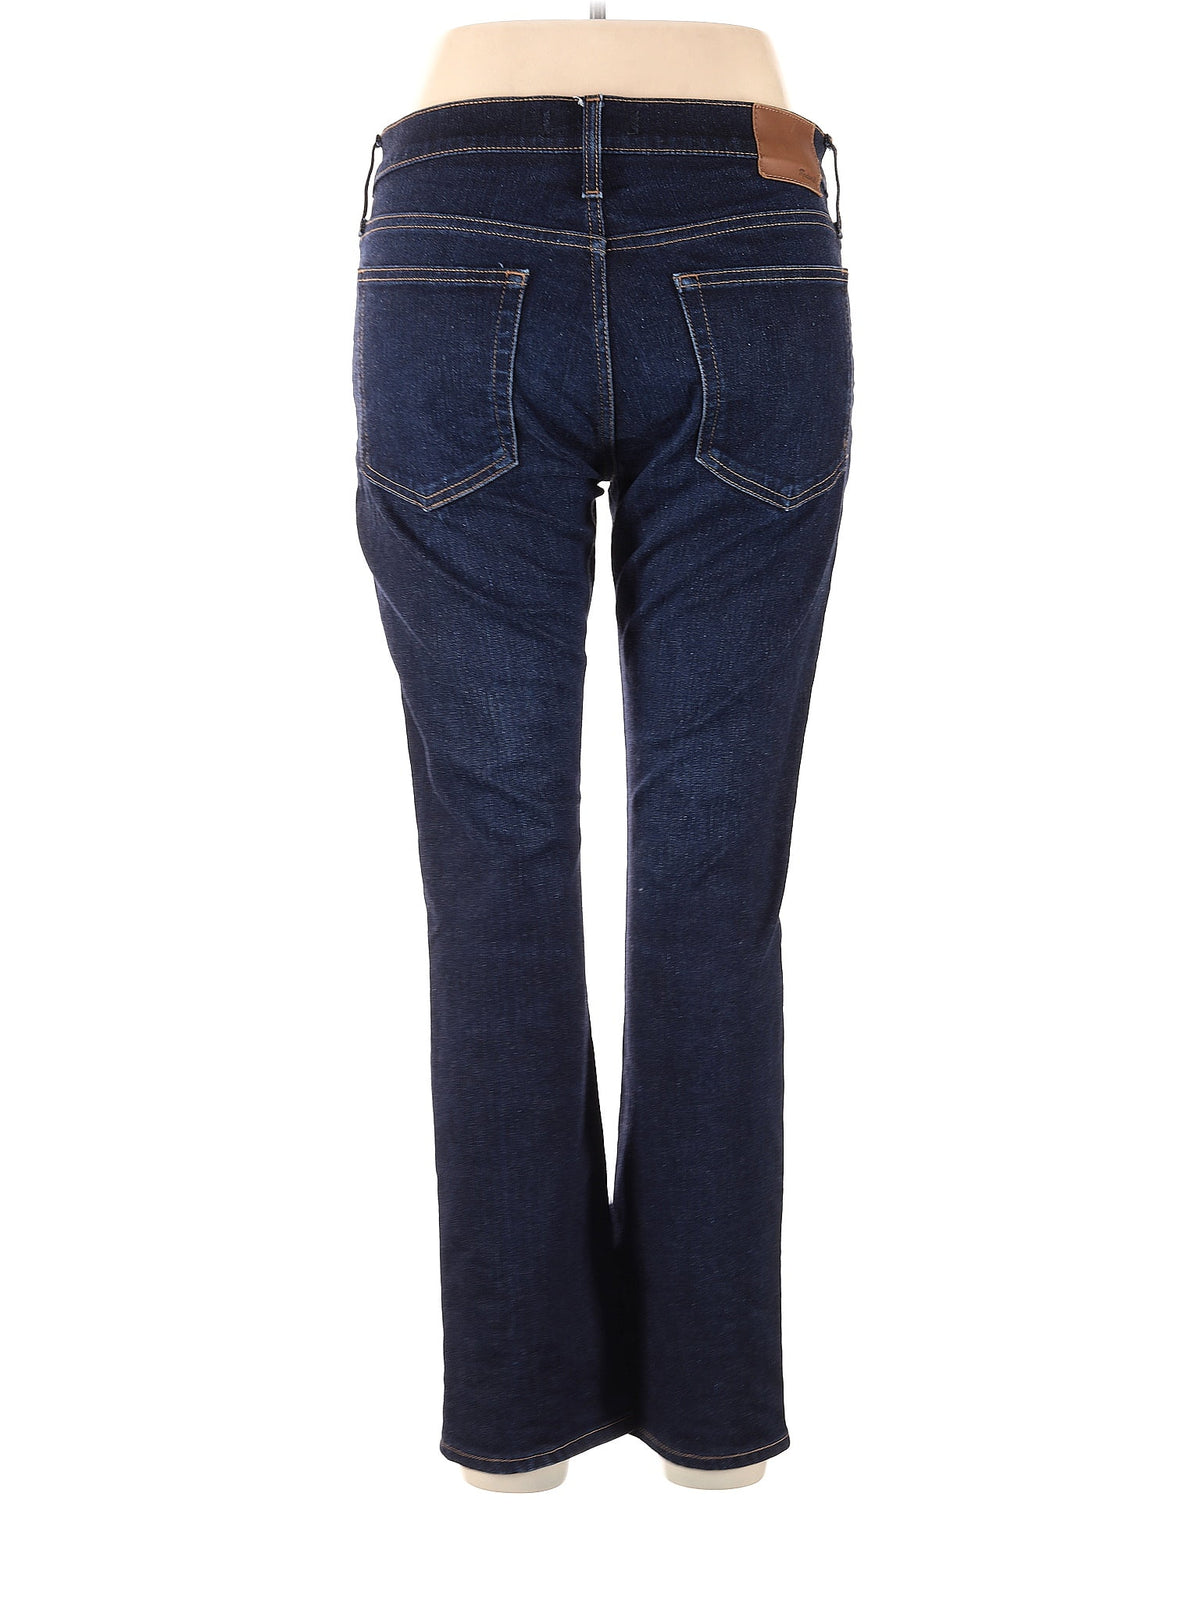 High-Rise Bootleg Jeans in Medium Wash waist size - 33